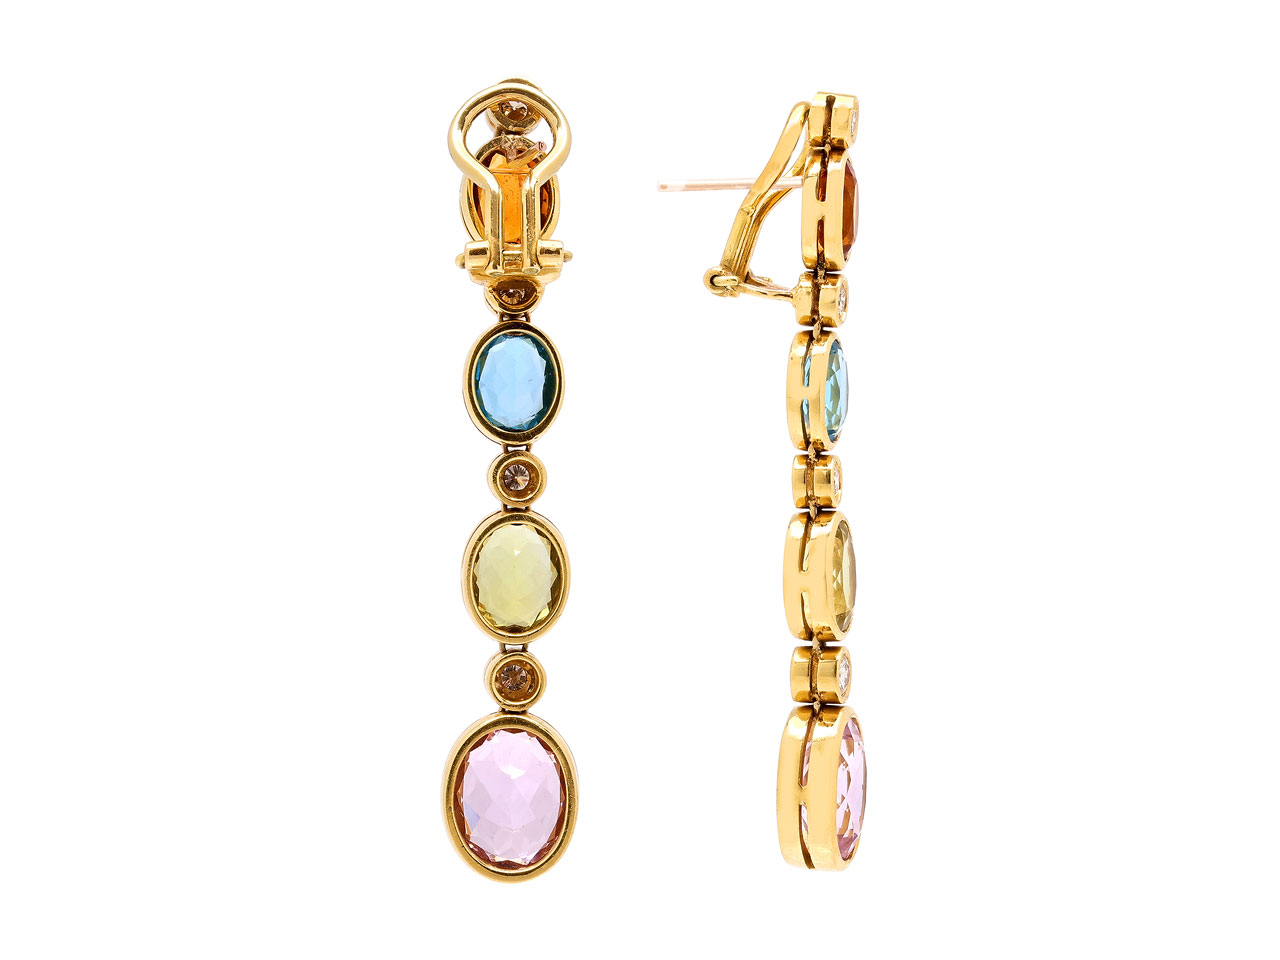 Gemstone and Diamond Earrings in 18K Gold